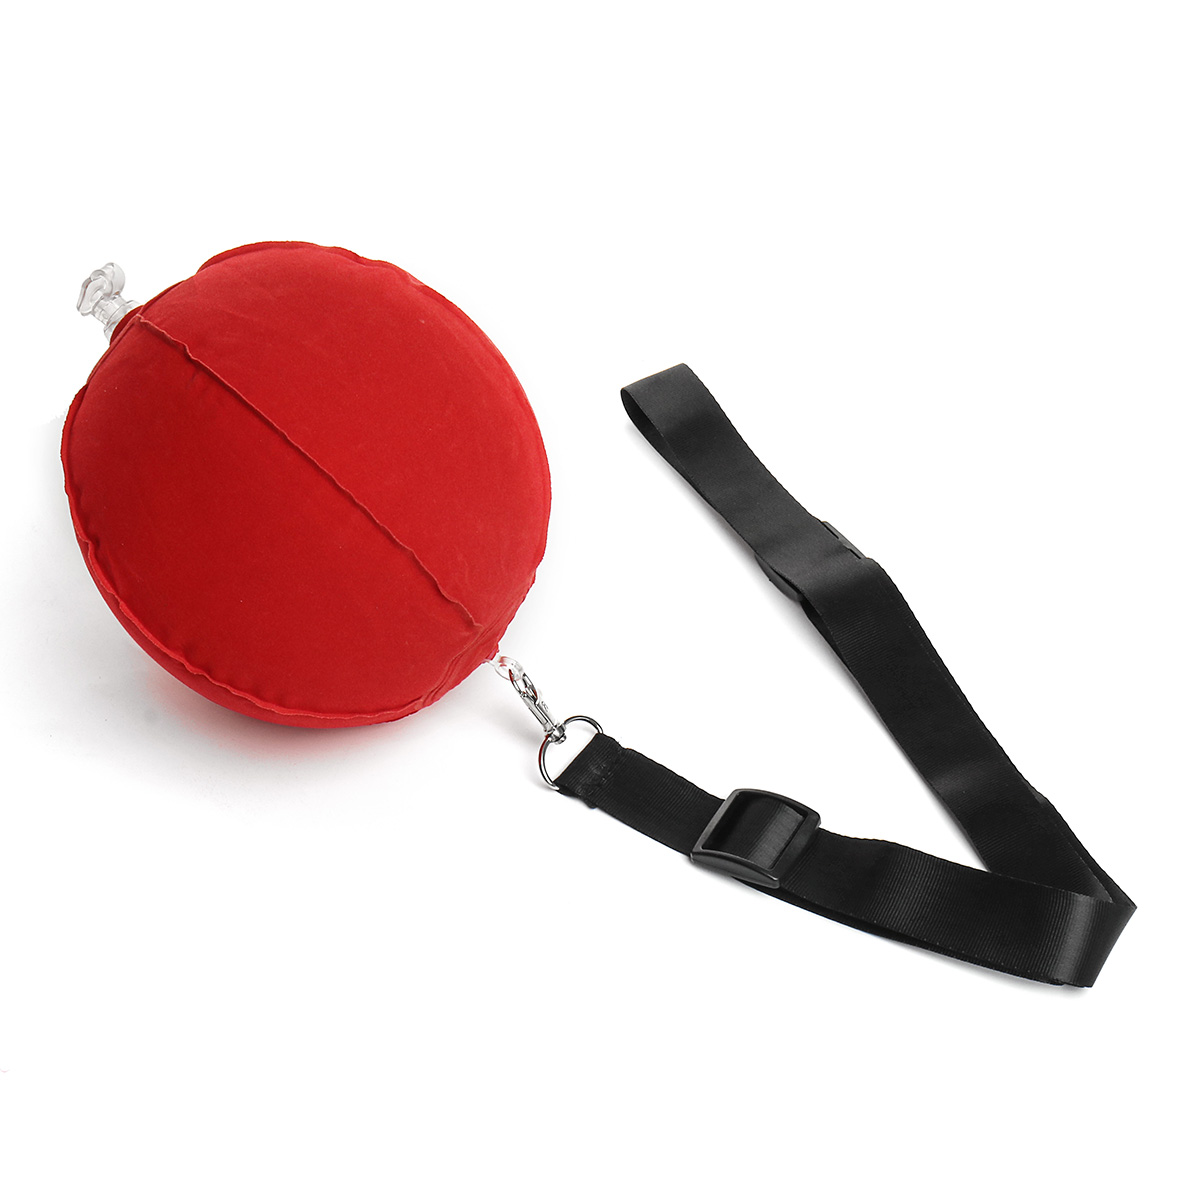 Golf-Impact-Ball-Golf-Swing-Trainer-Aid-Assist-Posture-Corrector-Supplies-1476814-8